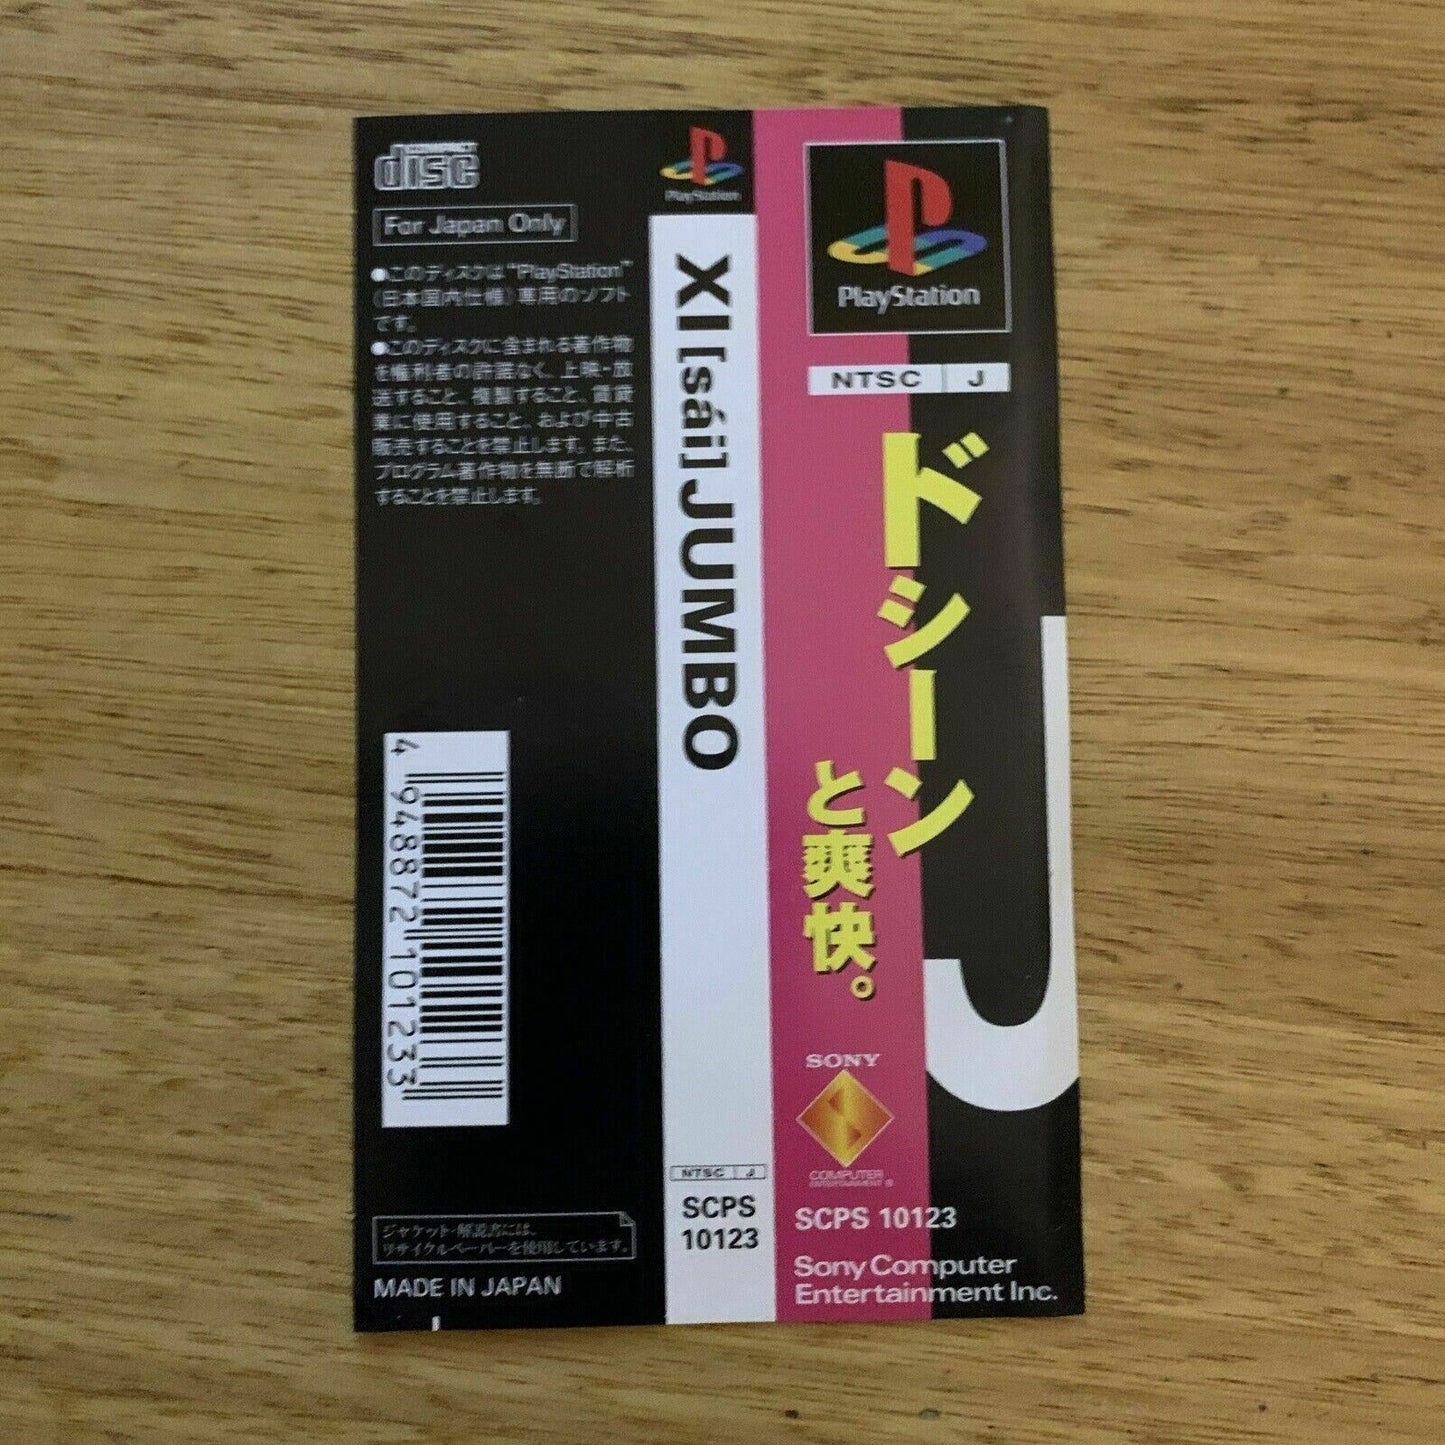 XI [sai] Jumbo - Sony Playstation PS1 NTSC-J Japan 3D Puzzle Action Game